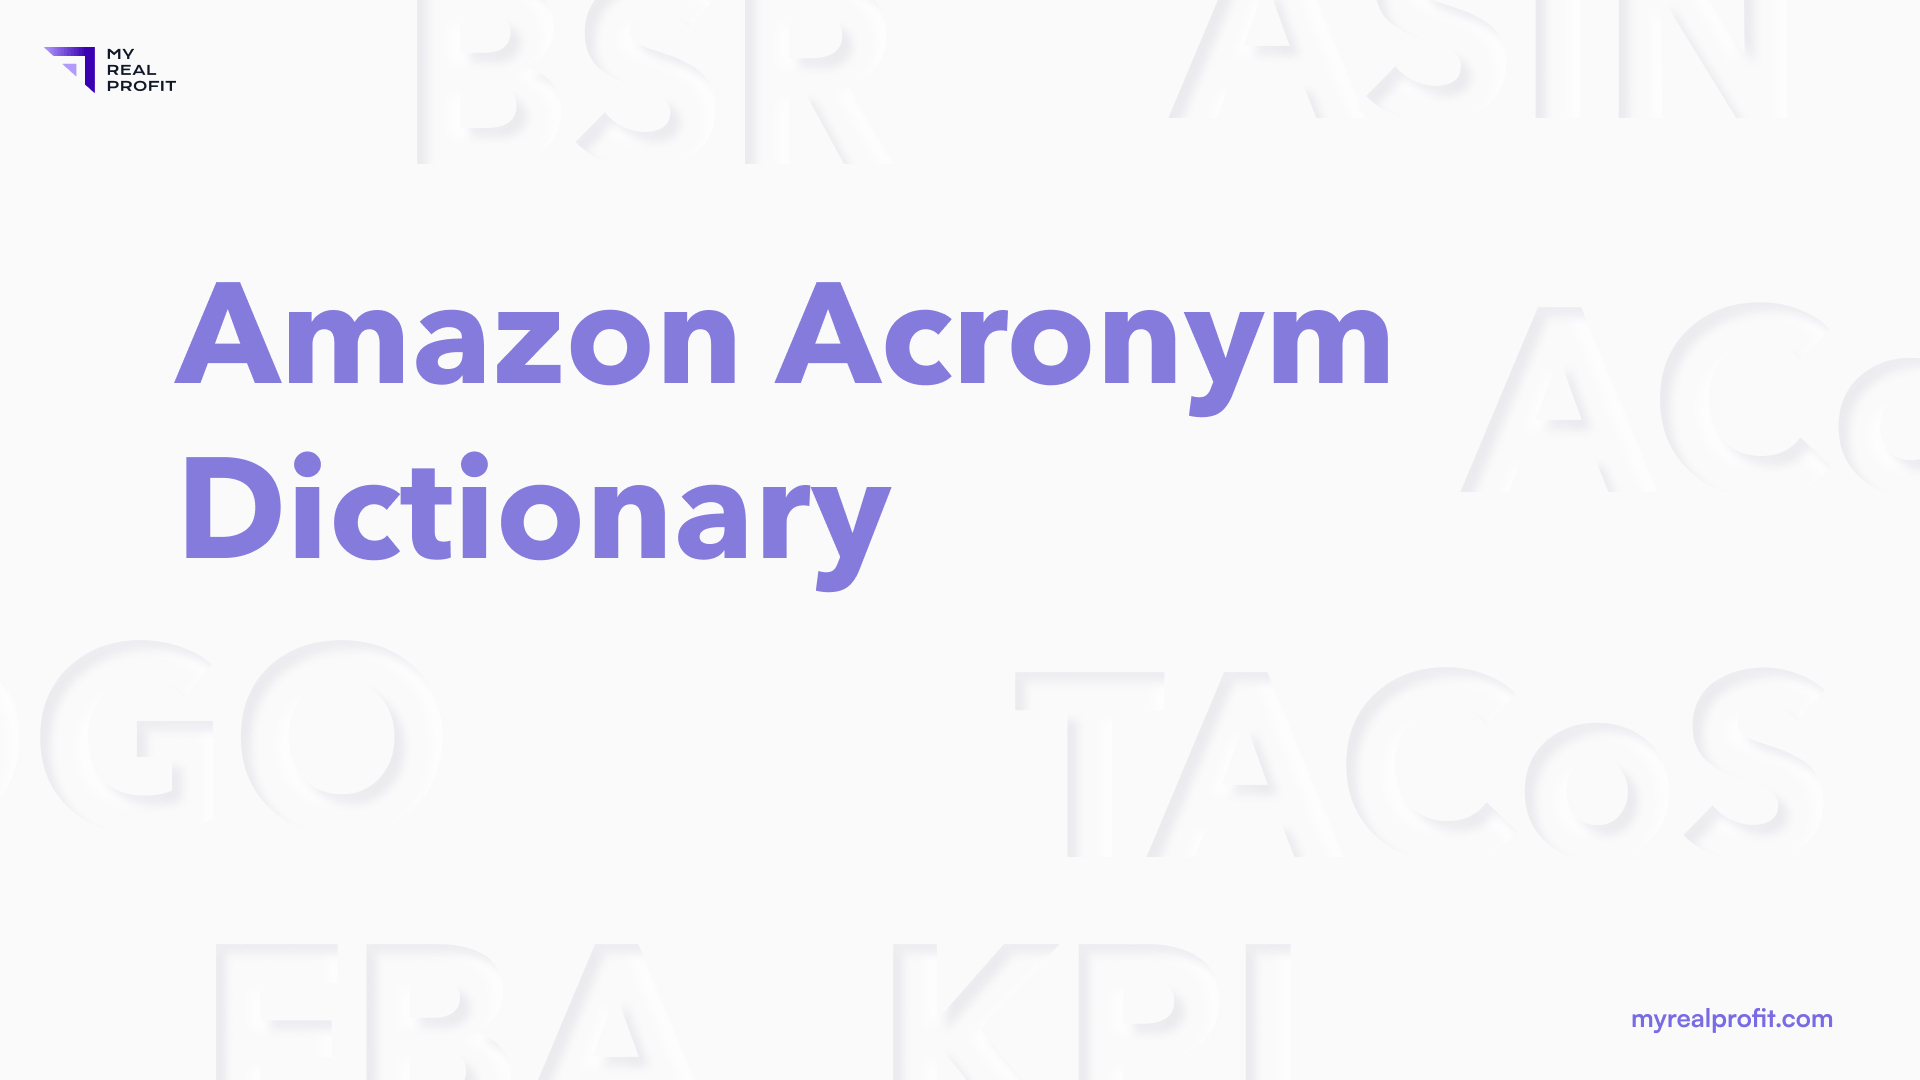 Amazon Acronyms Dictionary